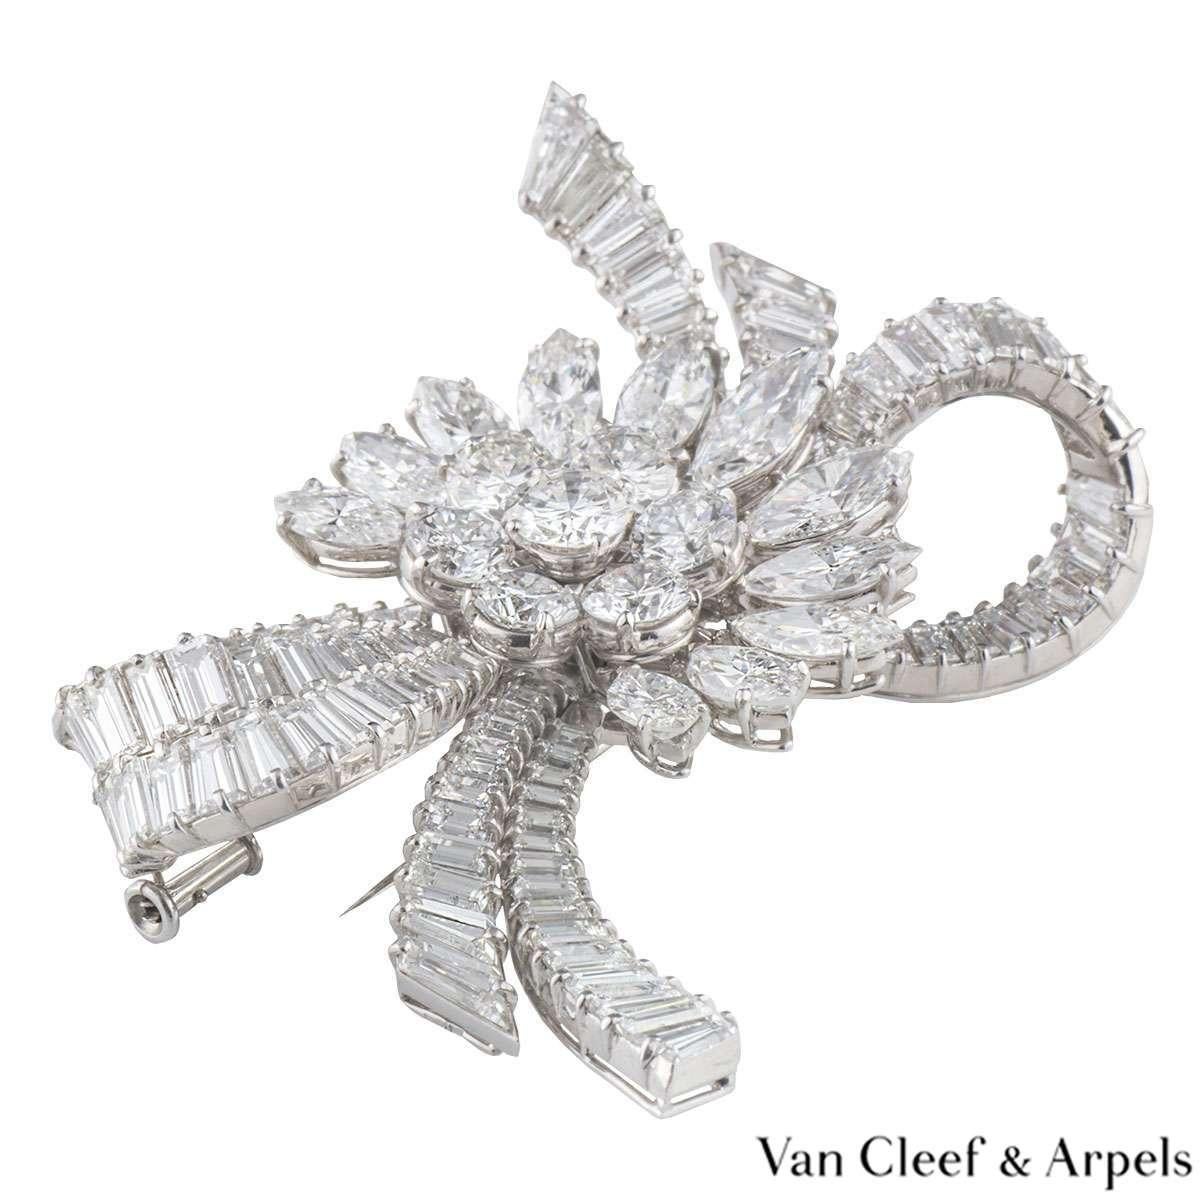 Van Cleef & Arpels Vintage 1950s Diamond Platinum Brooch 14 Carat For Sale 2